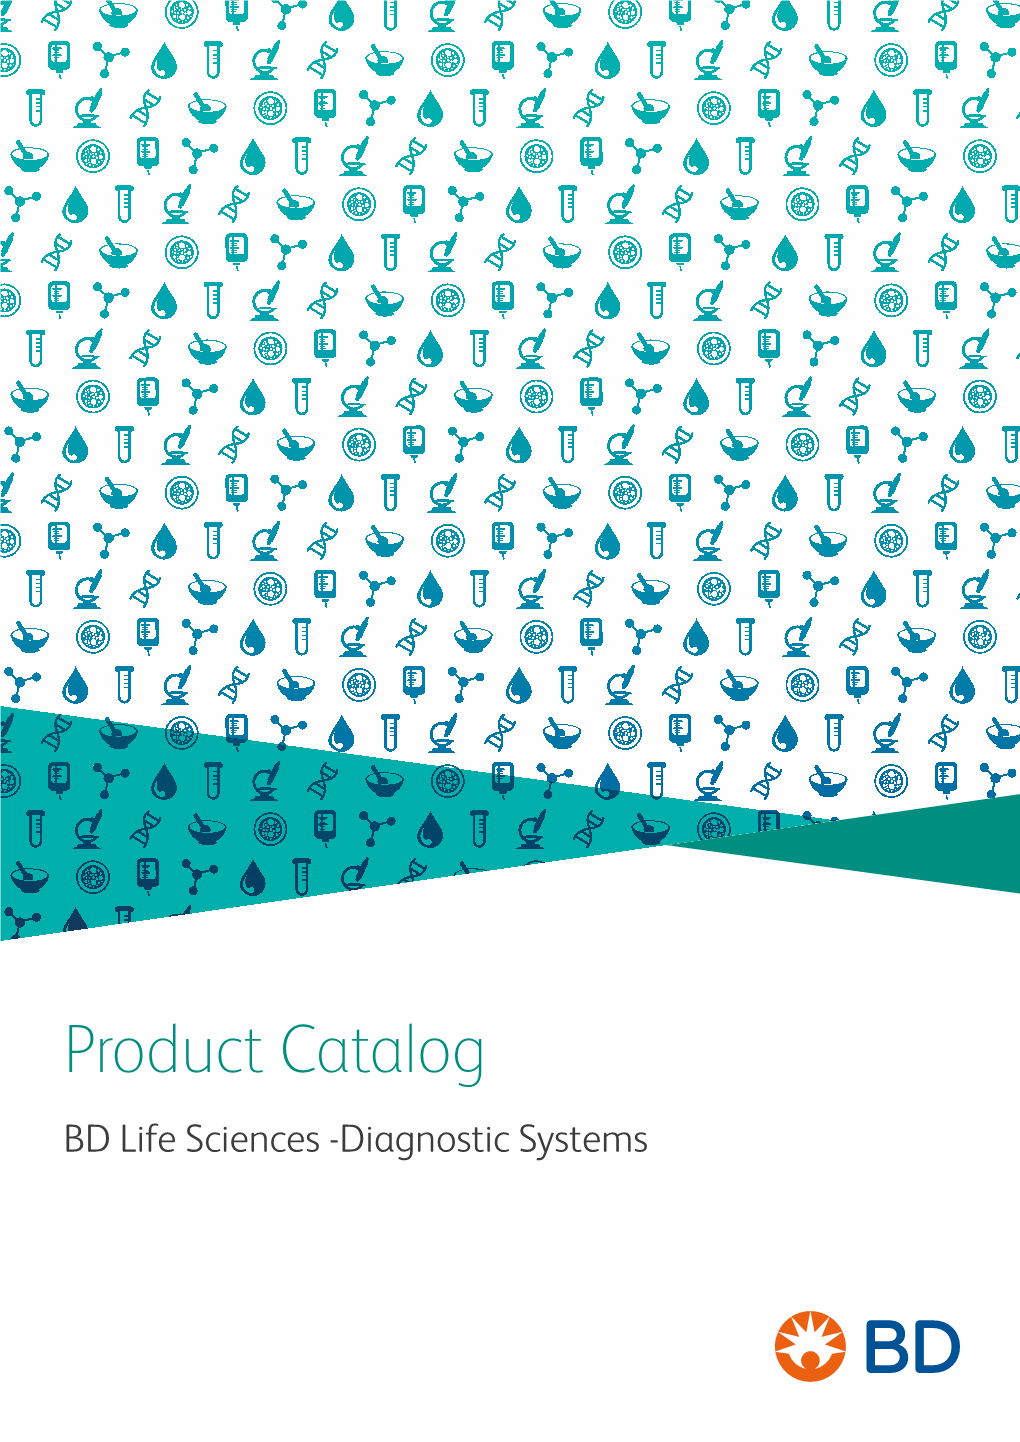 Product Catalog 2017 BD Life Sciences - Diagnostic Systems